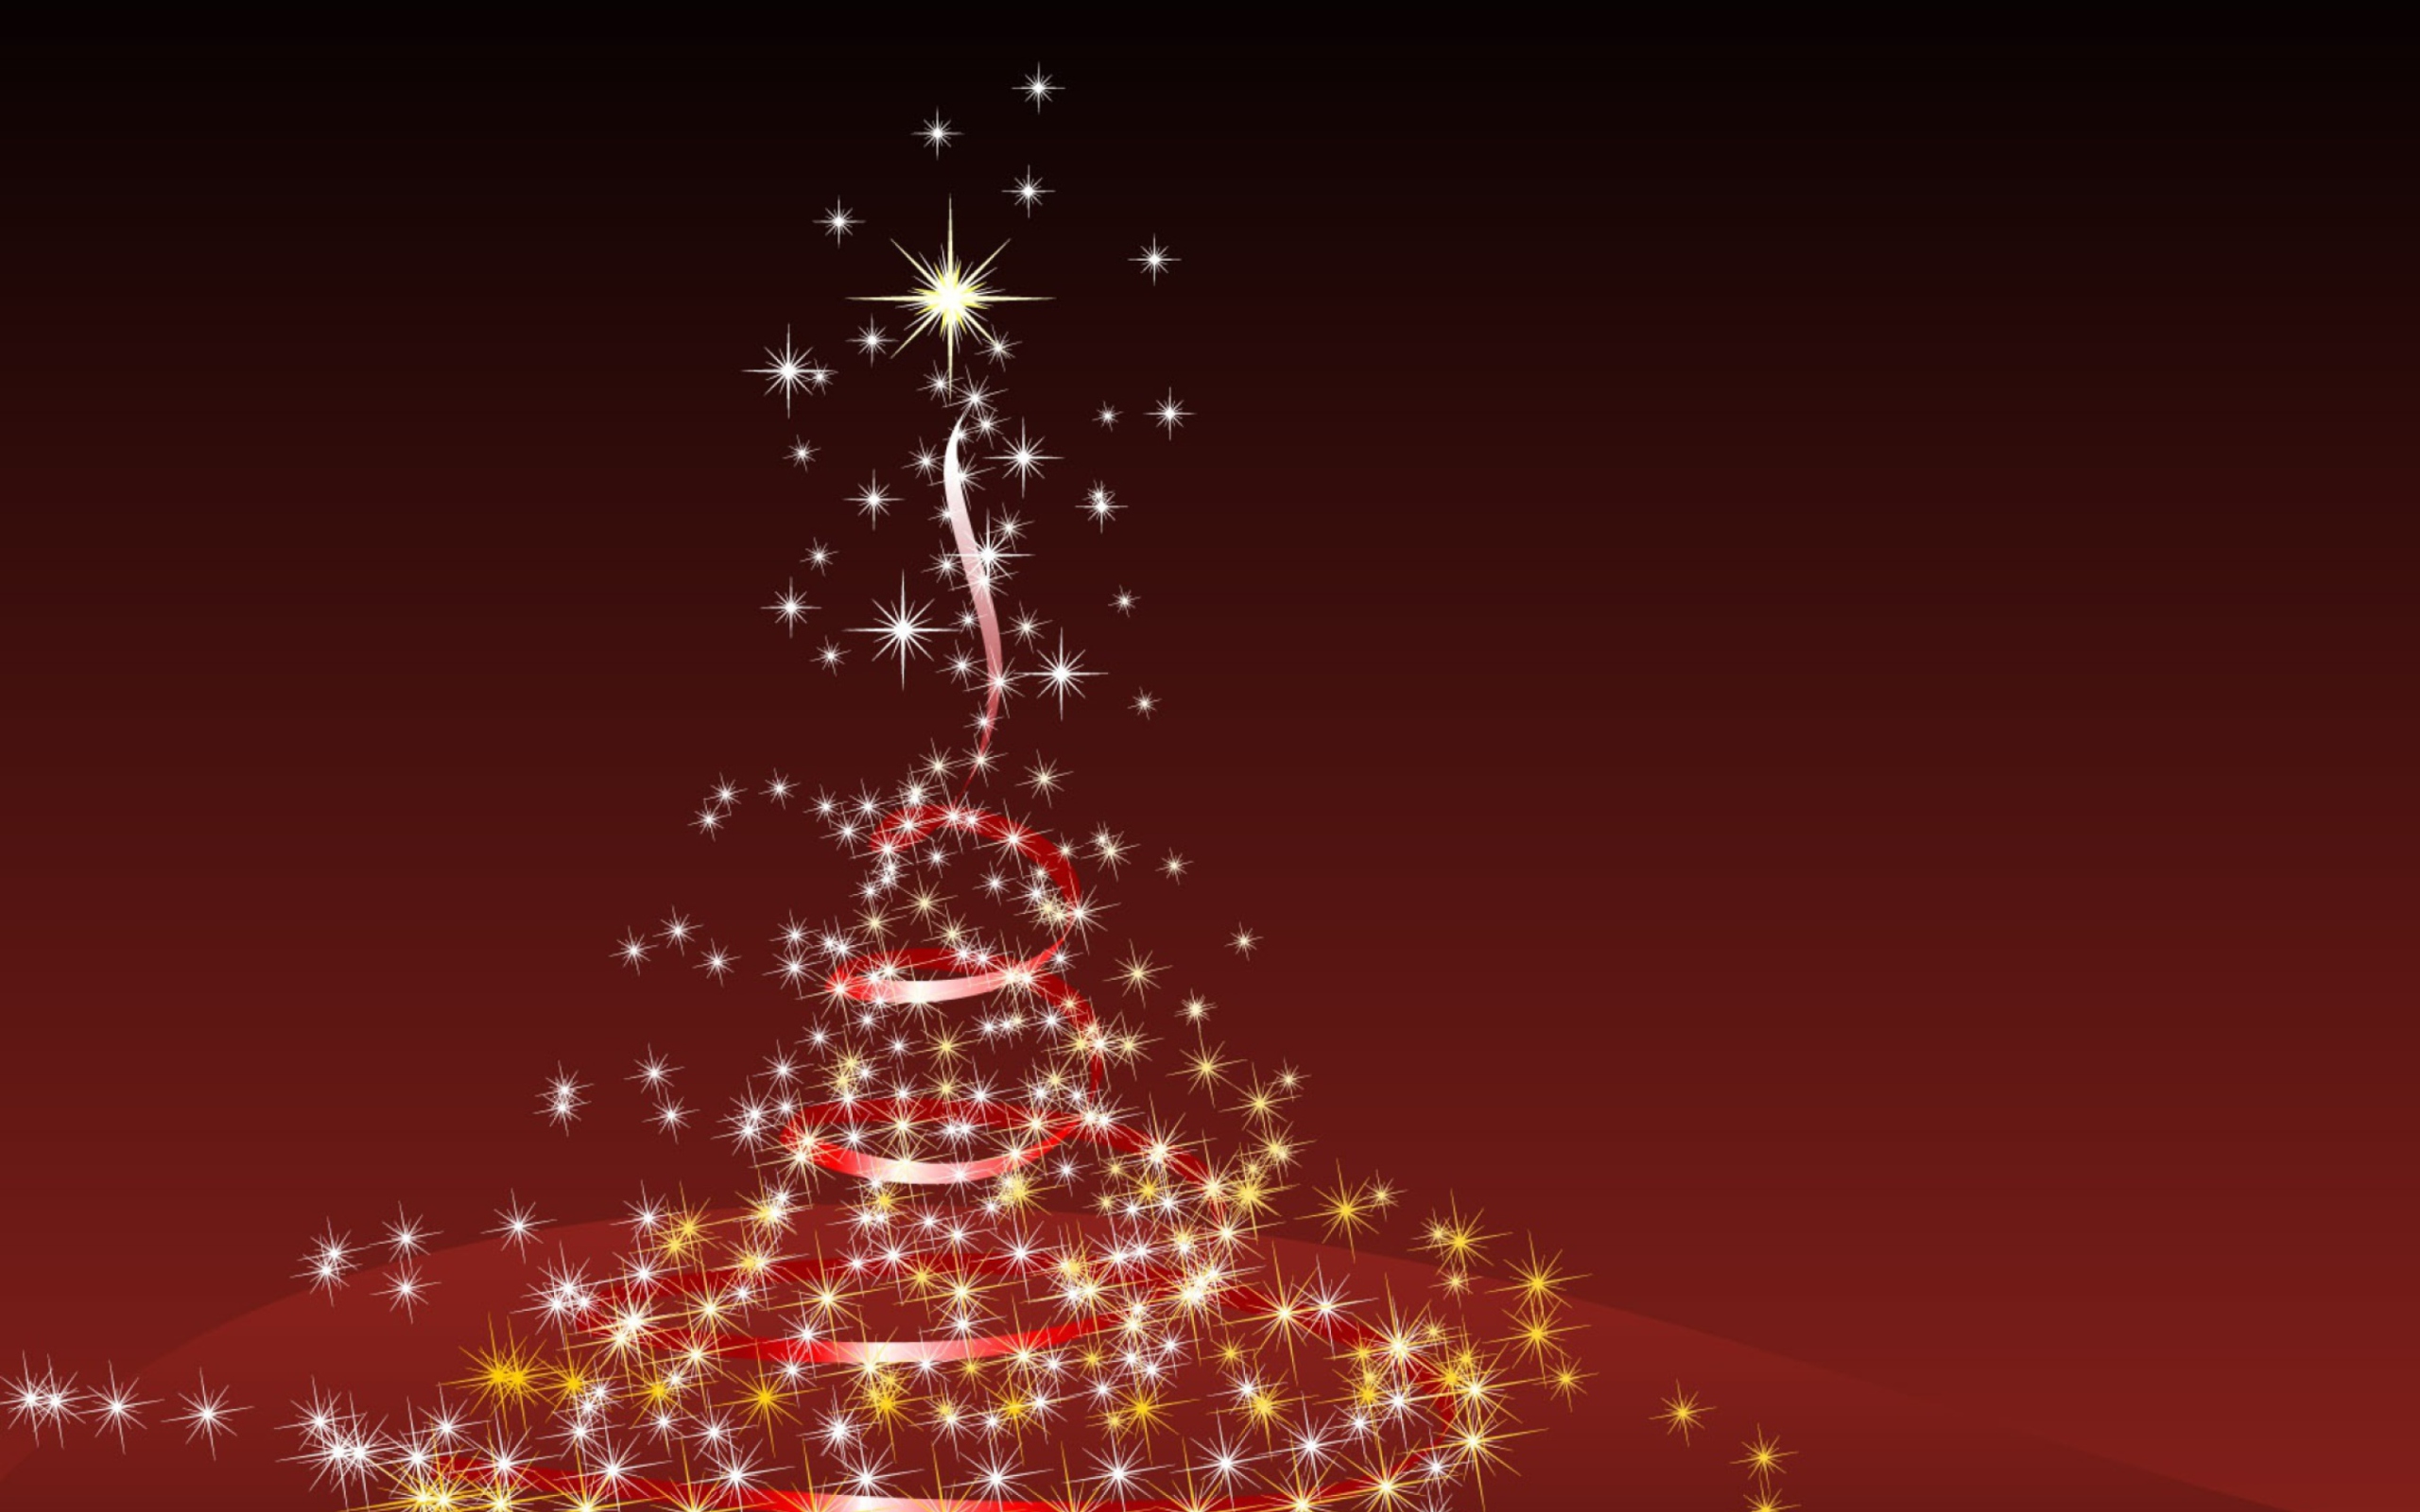 Merry Christmas Lights wallpaper 2560x1600